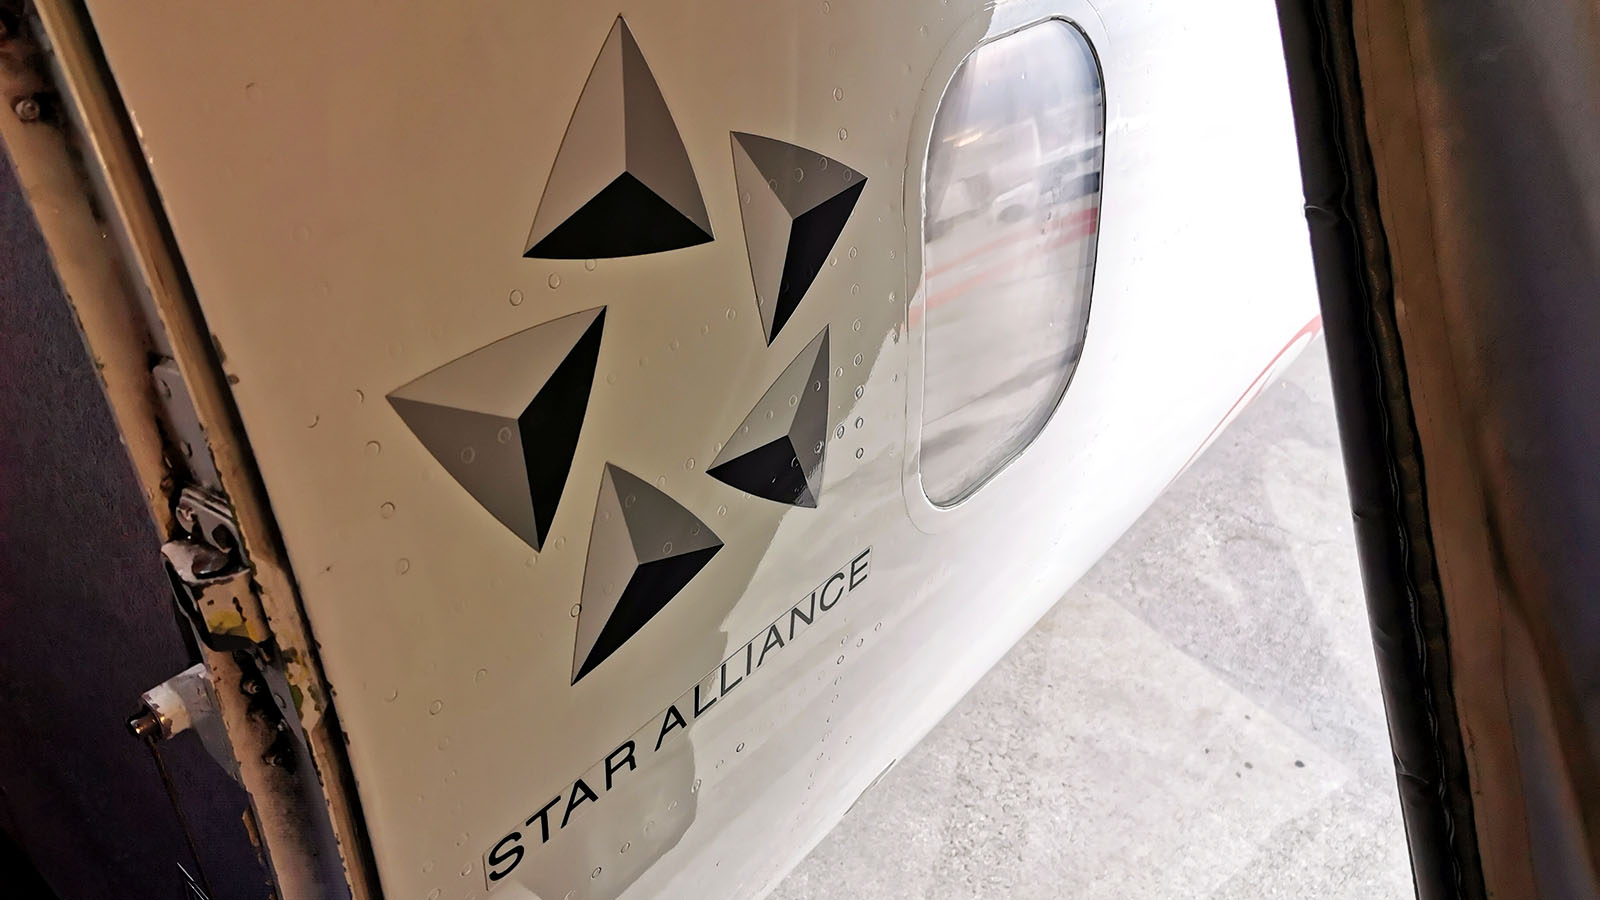 Air Canada belongs to Star Alliance